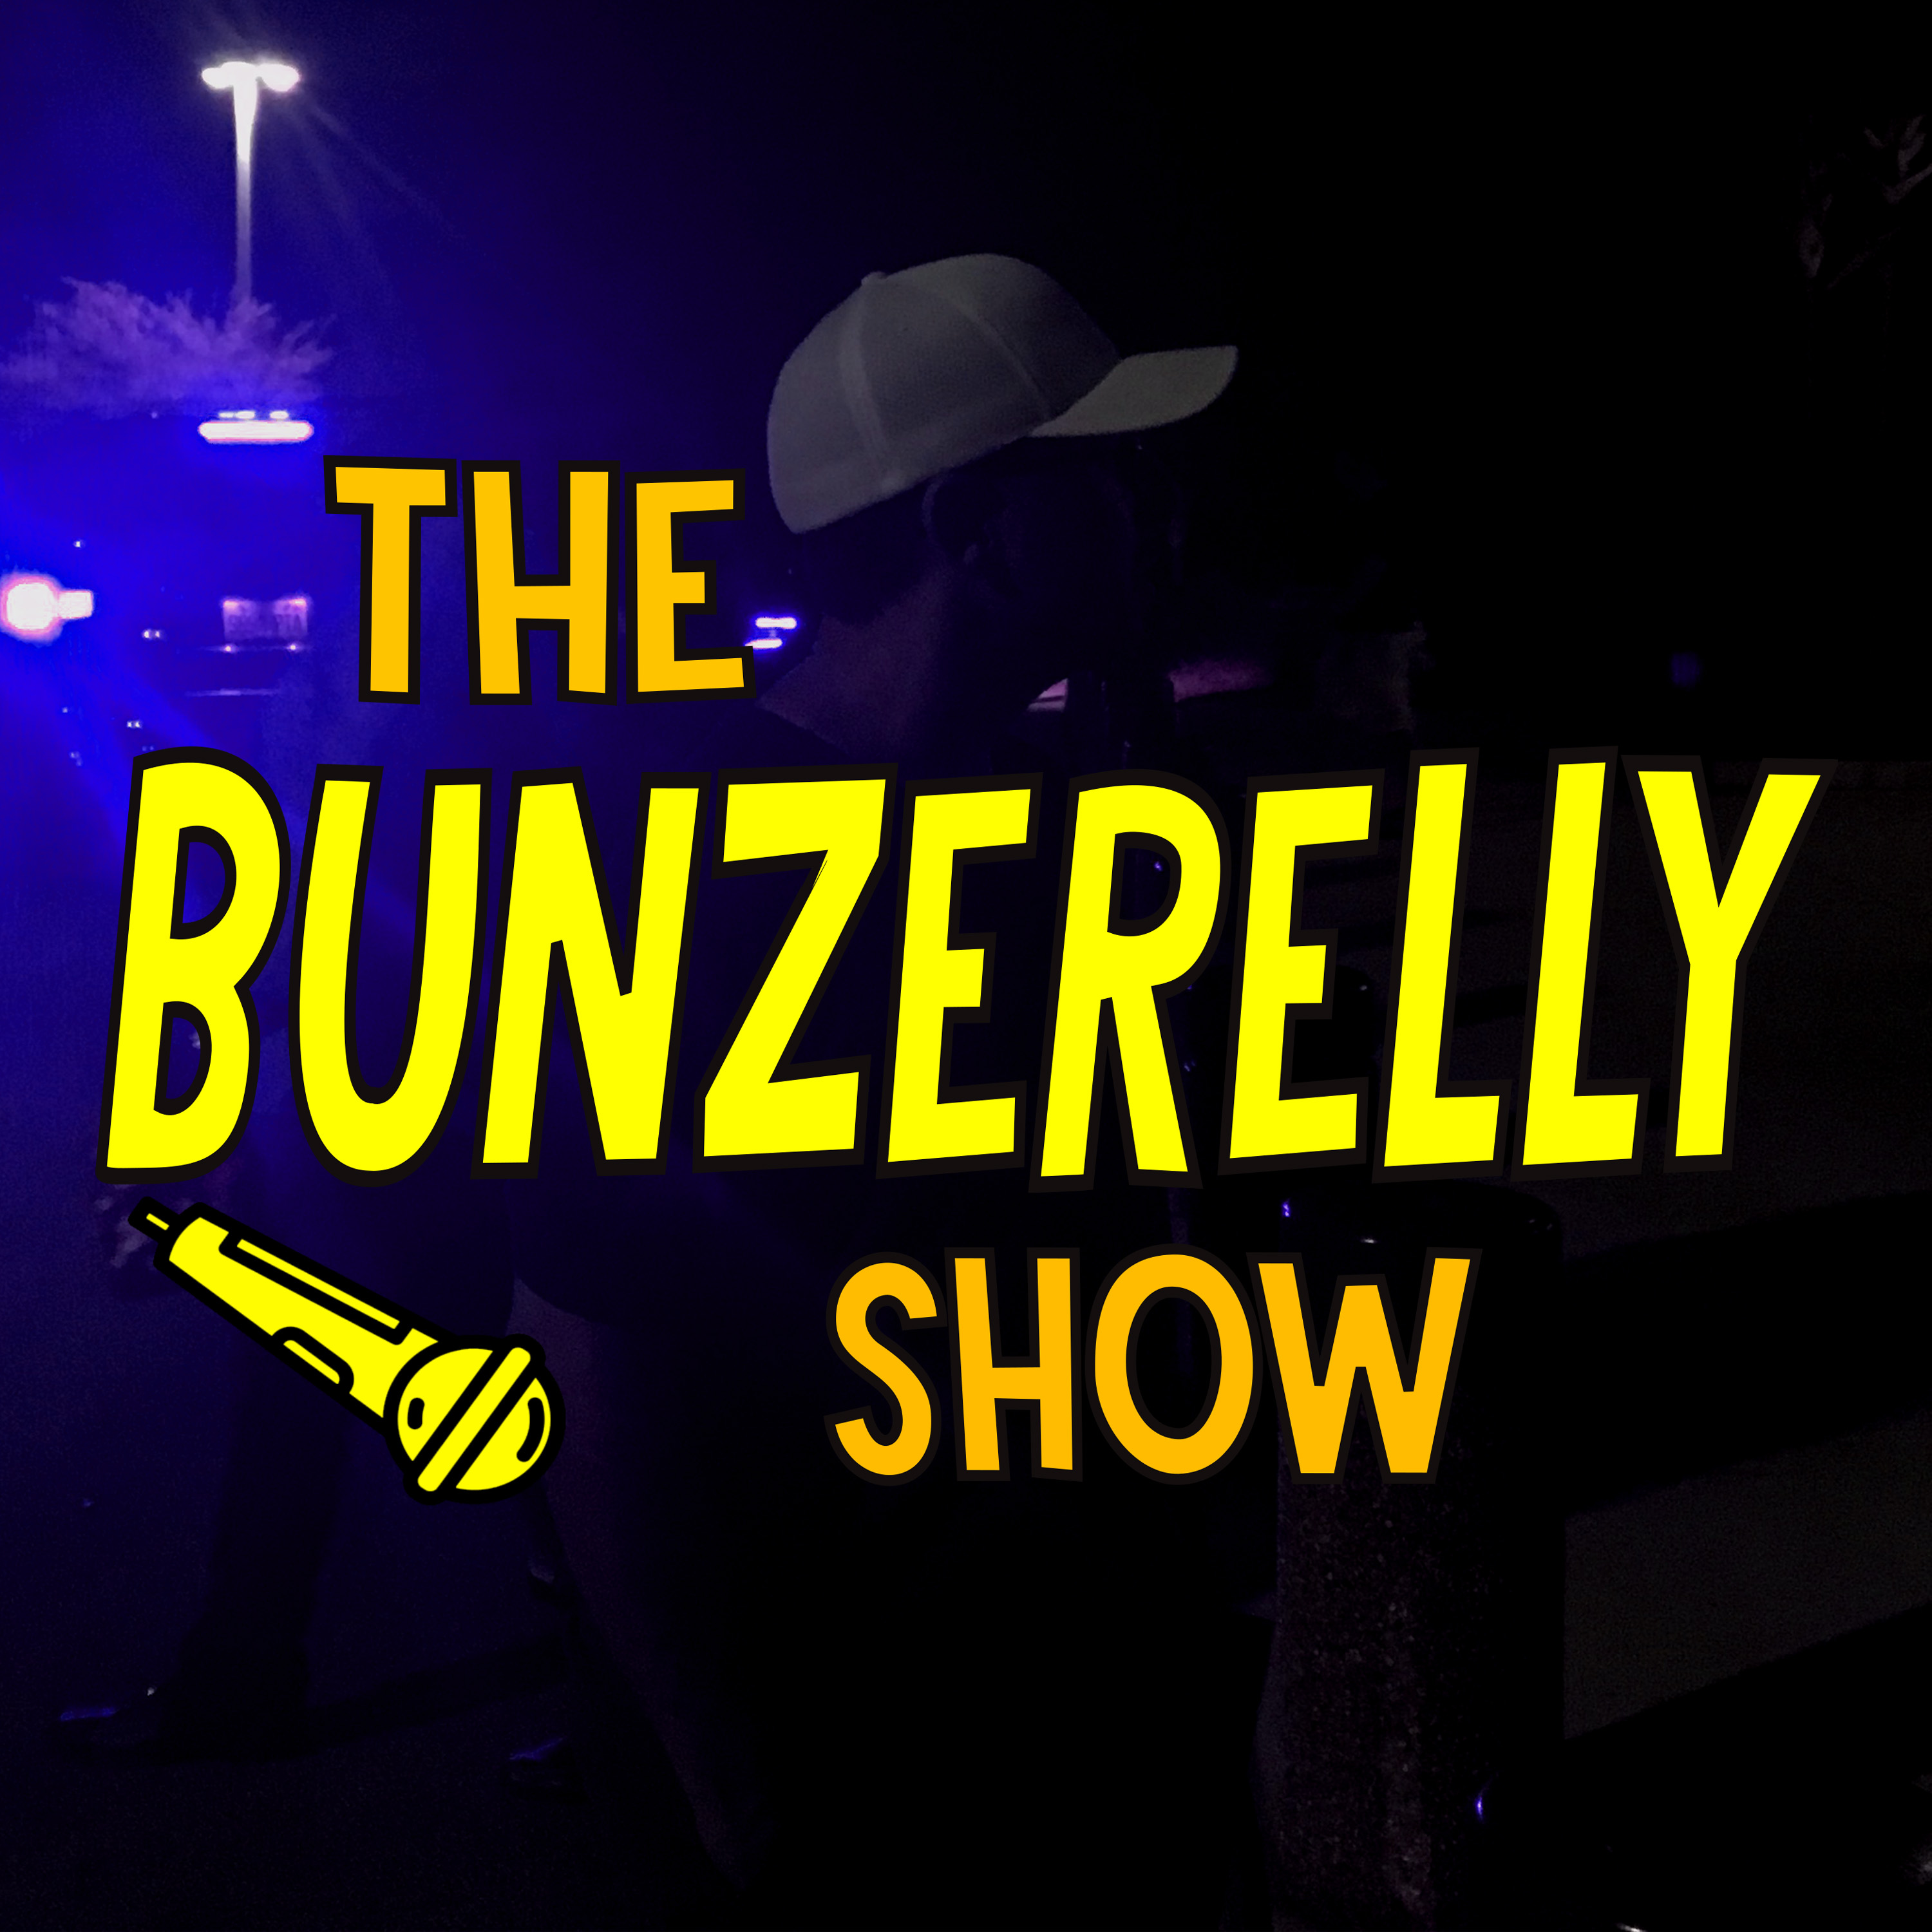 The Bunzerelly Show logo